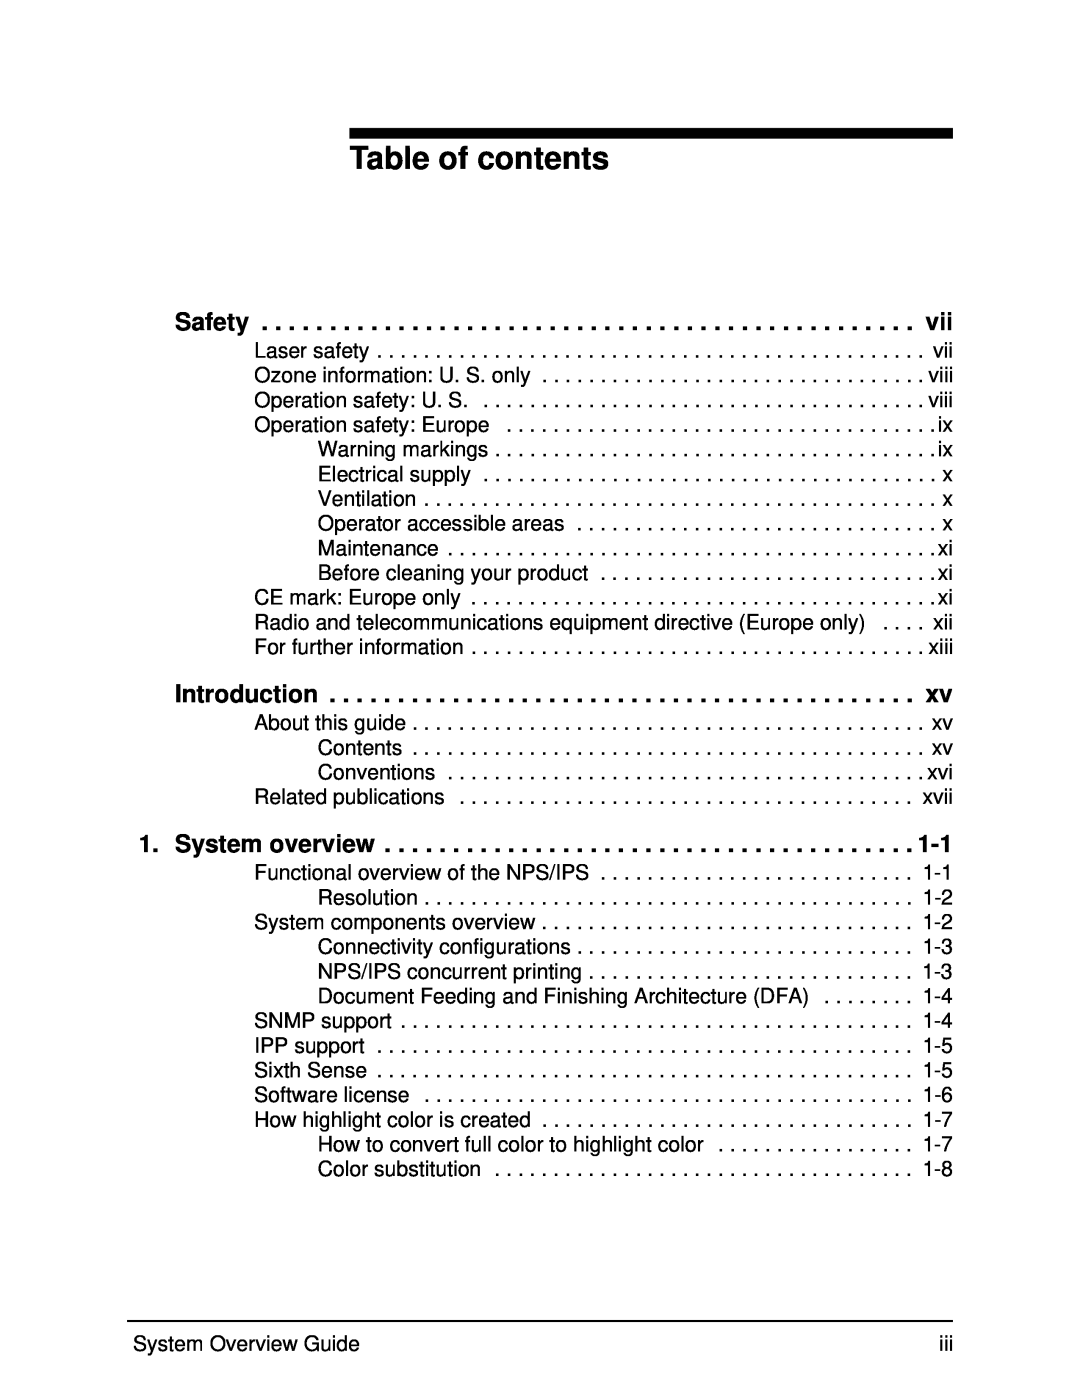 Xerox 4850, IPS, NPS, 4890, 92C manual Table of contents 